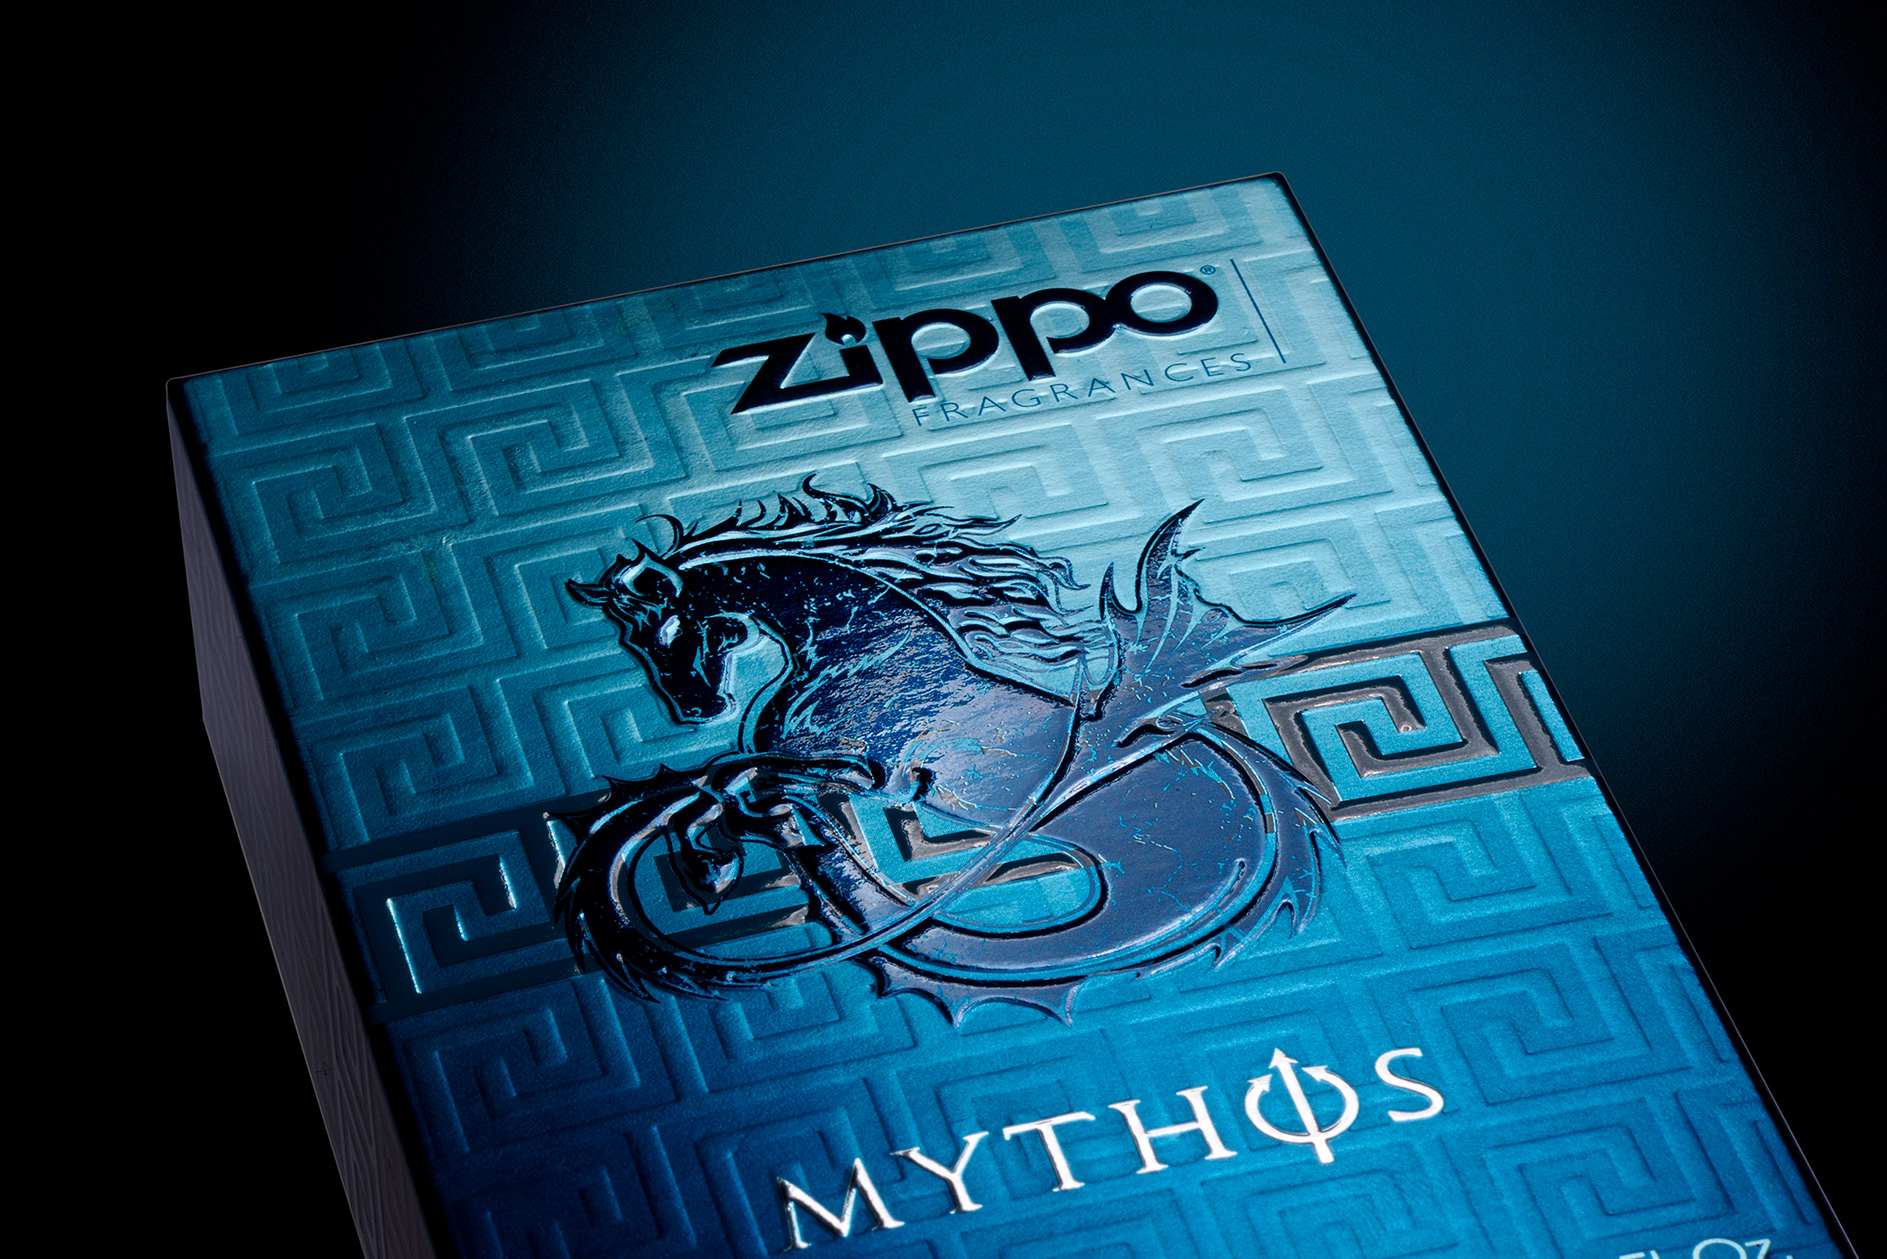 Mythos Zippo Fragrances